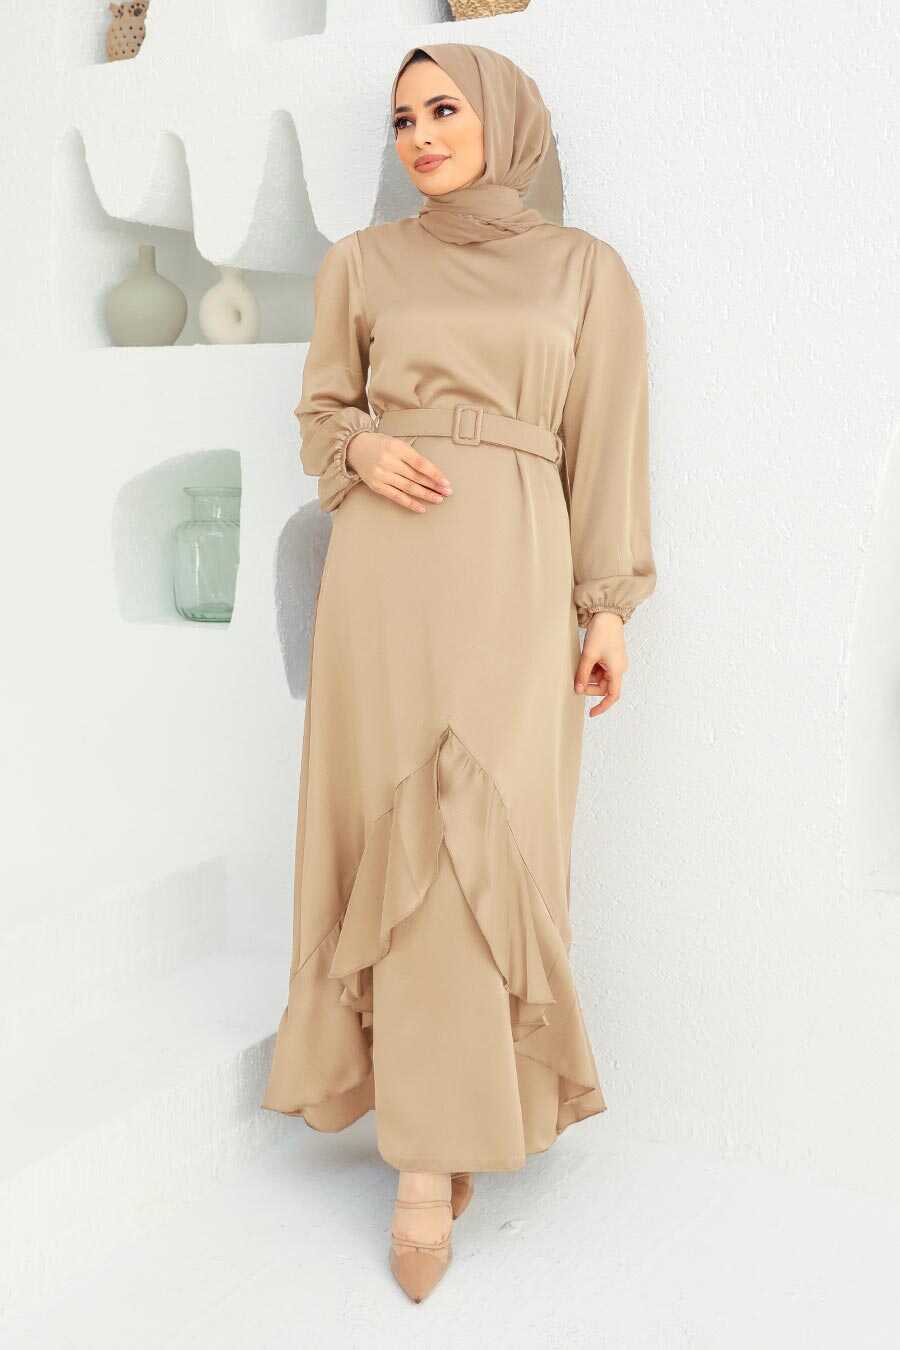 Neva Style - Elegant Beige Muslim Fashion Evening Dress 4566BEJ